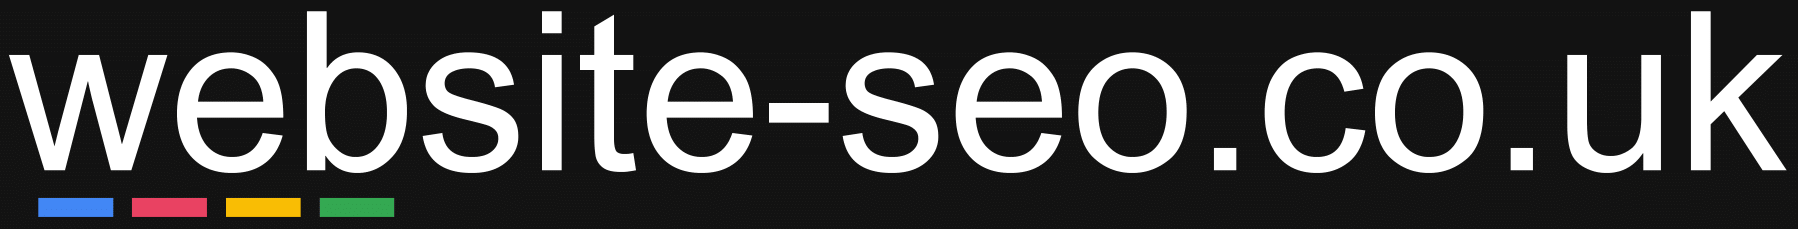 www.website-seo.co.uk logo | Local Suffolk based web designer and SEO specialist